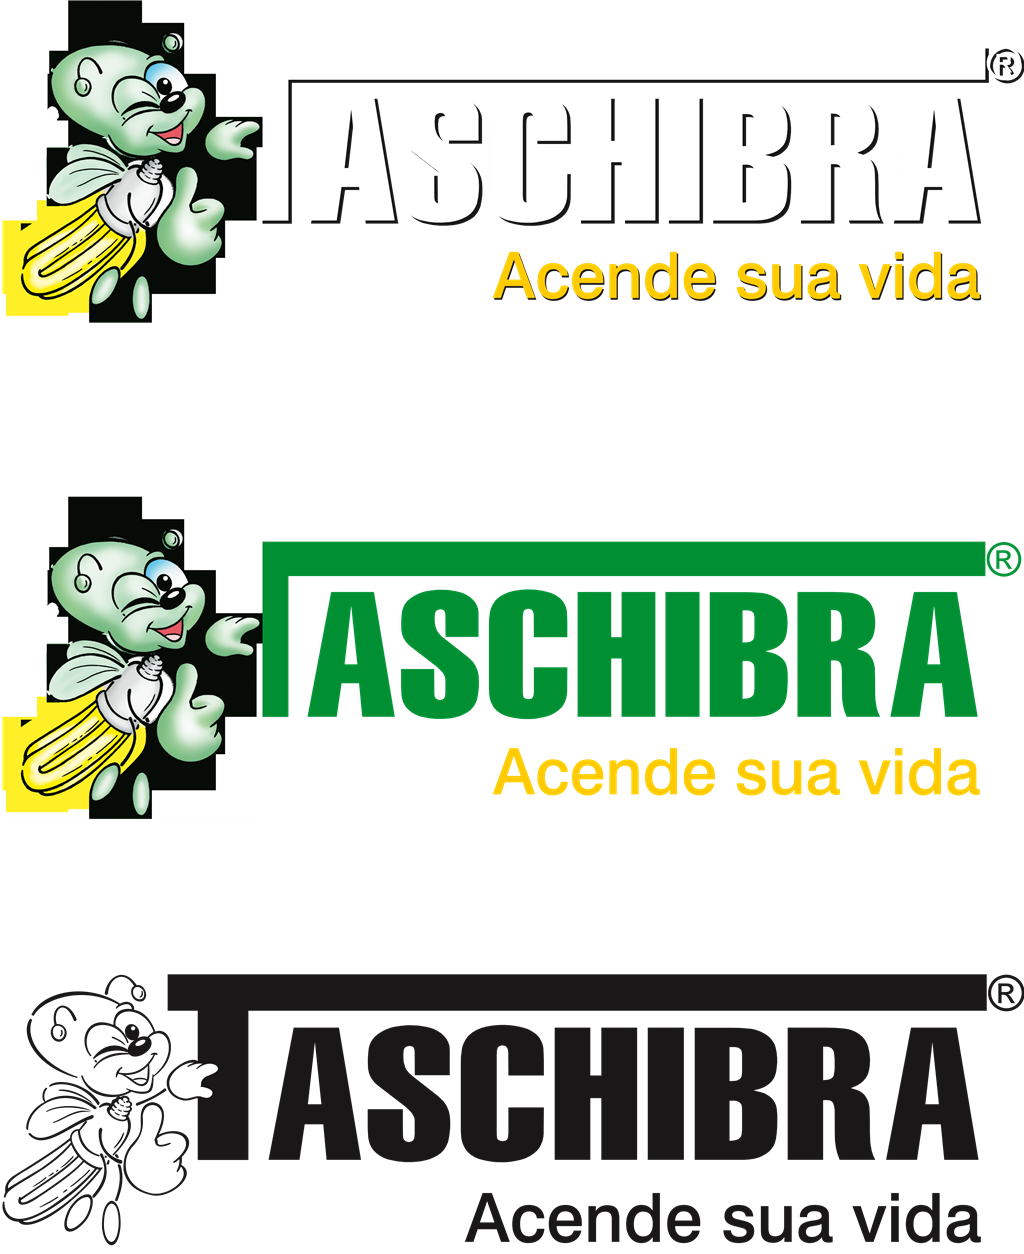 Taschibra logotype, transparent .png, medium, large